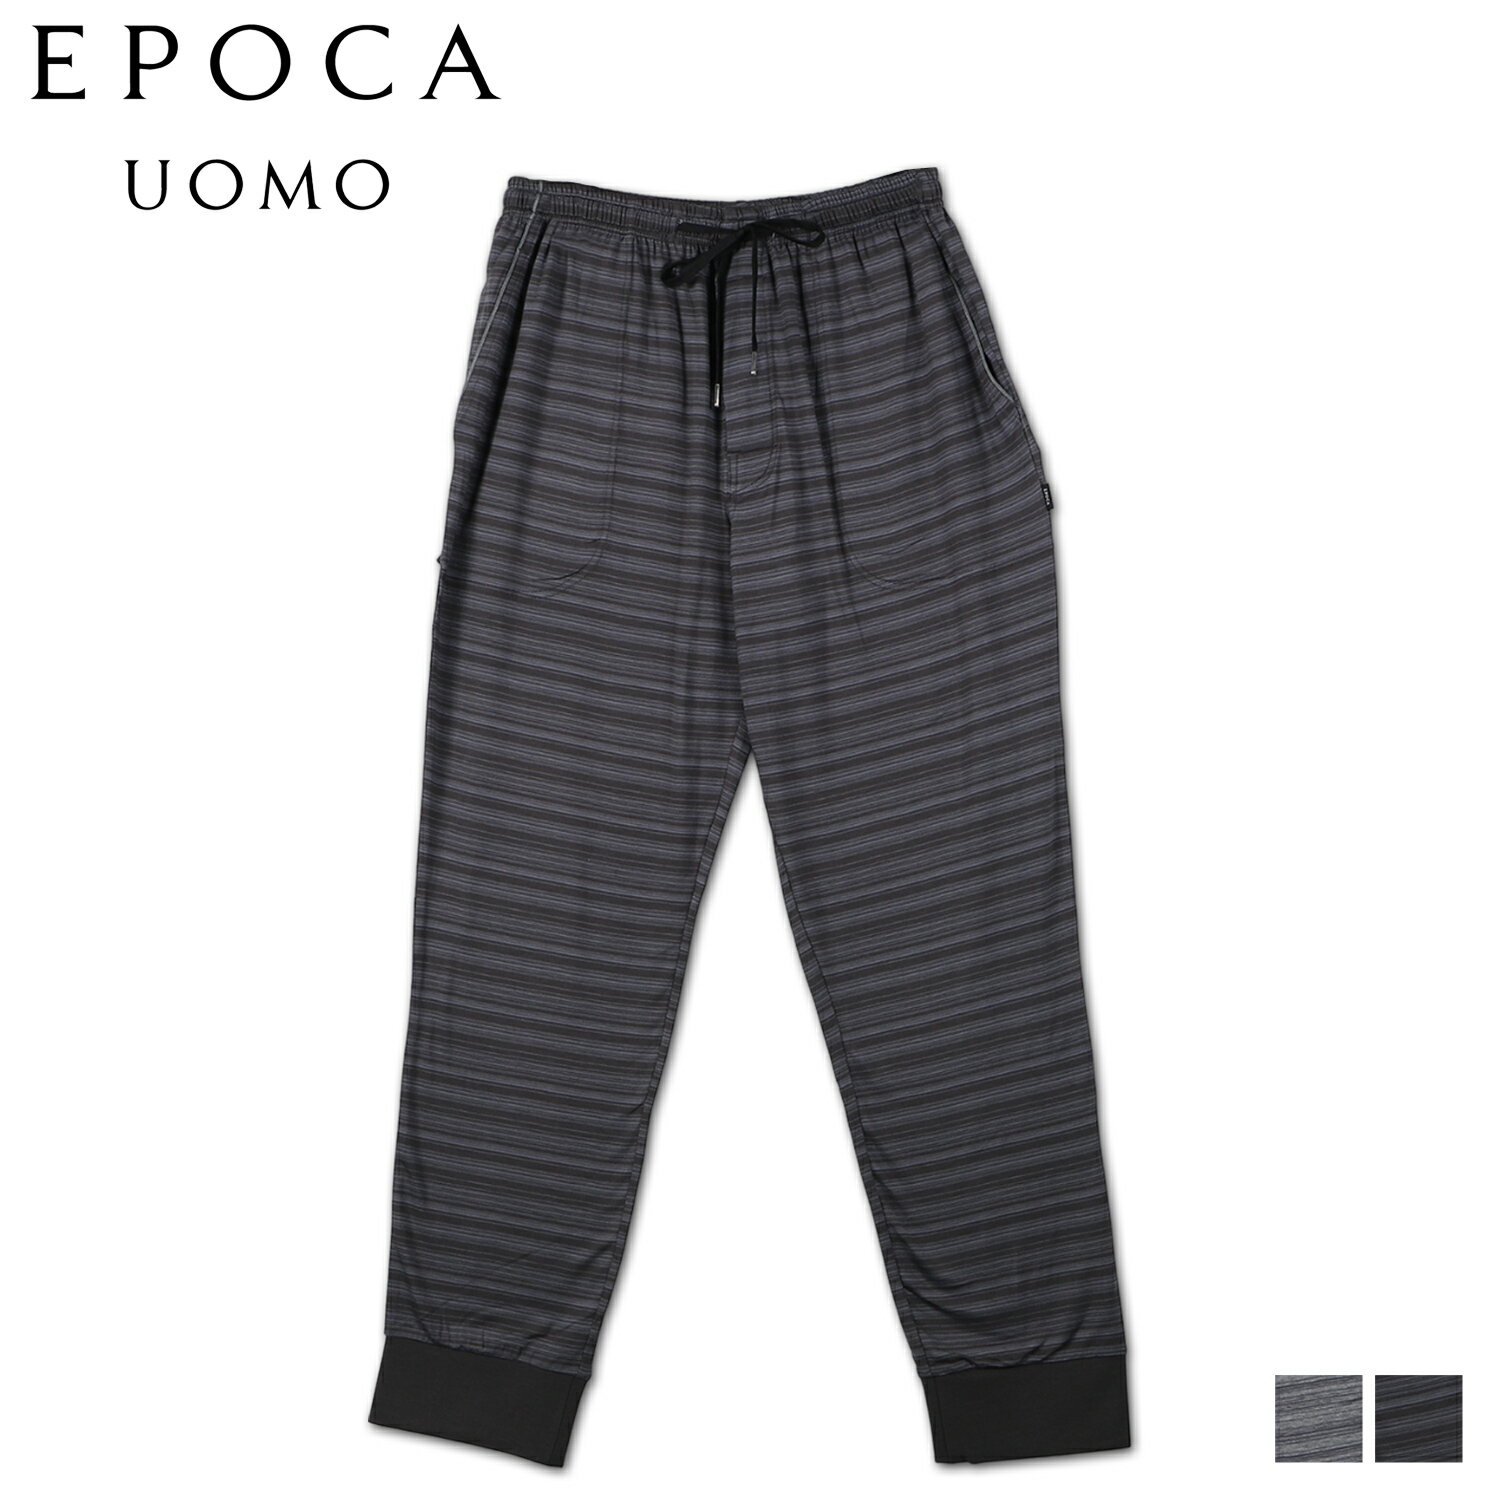 EPOCA UOMO エポカ ウォモ ルームウェア 部屋着 パジャマ ナイトウェア メンズ 男性